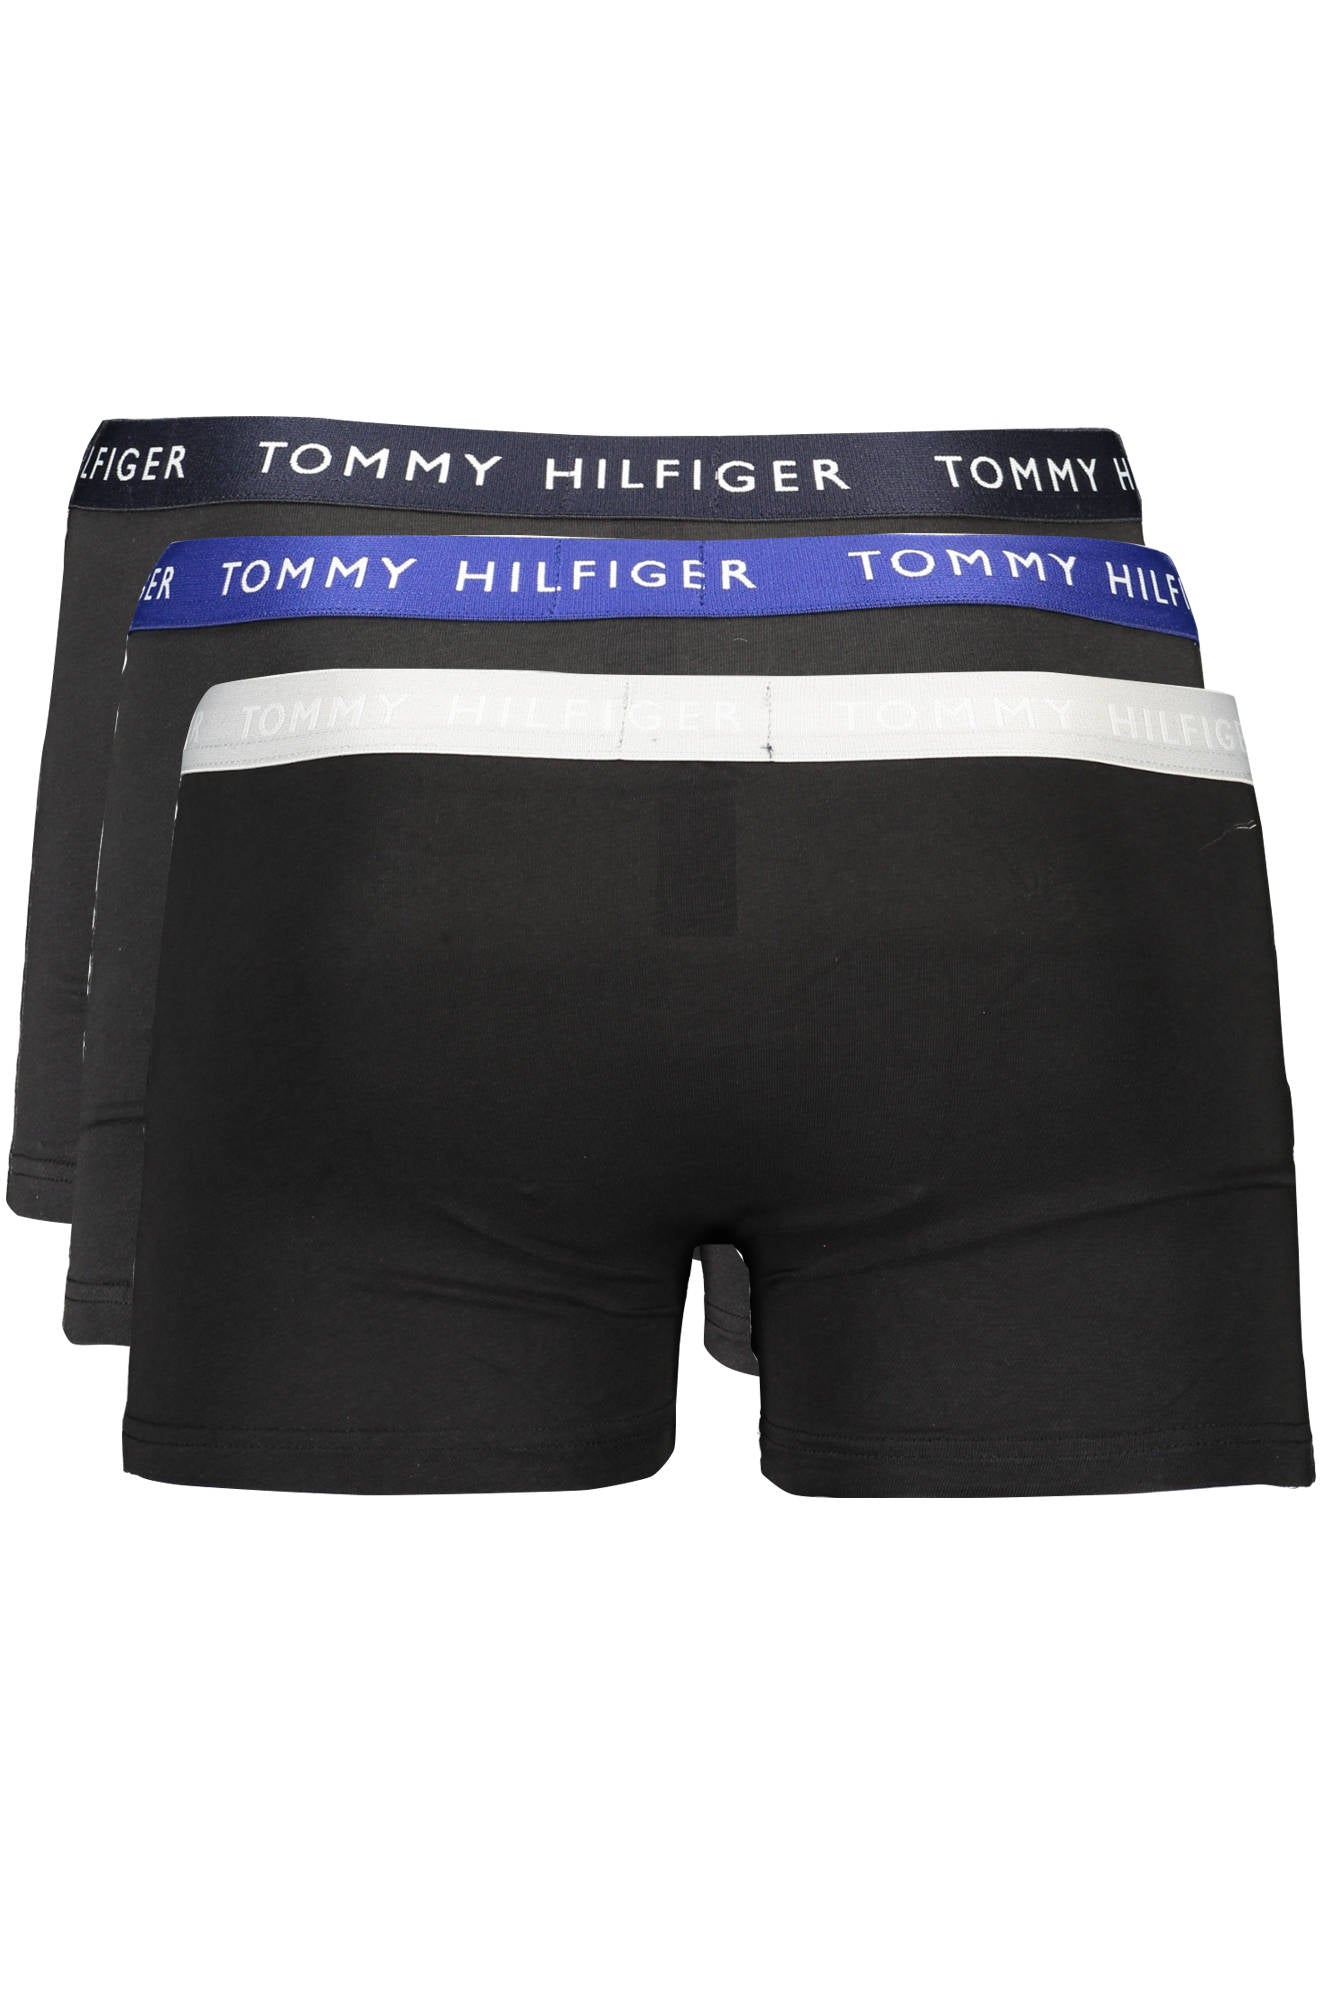 TOMMY HILFIGER BOXER Uomo